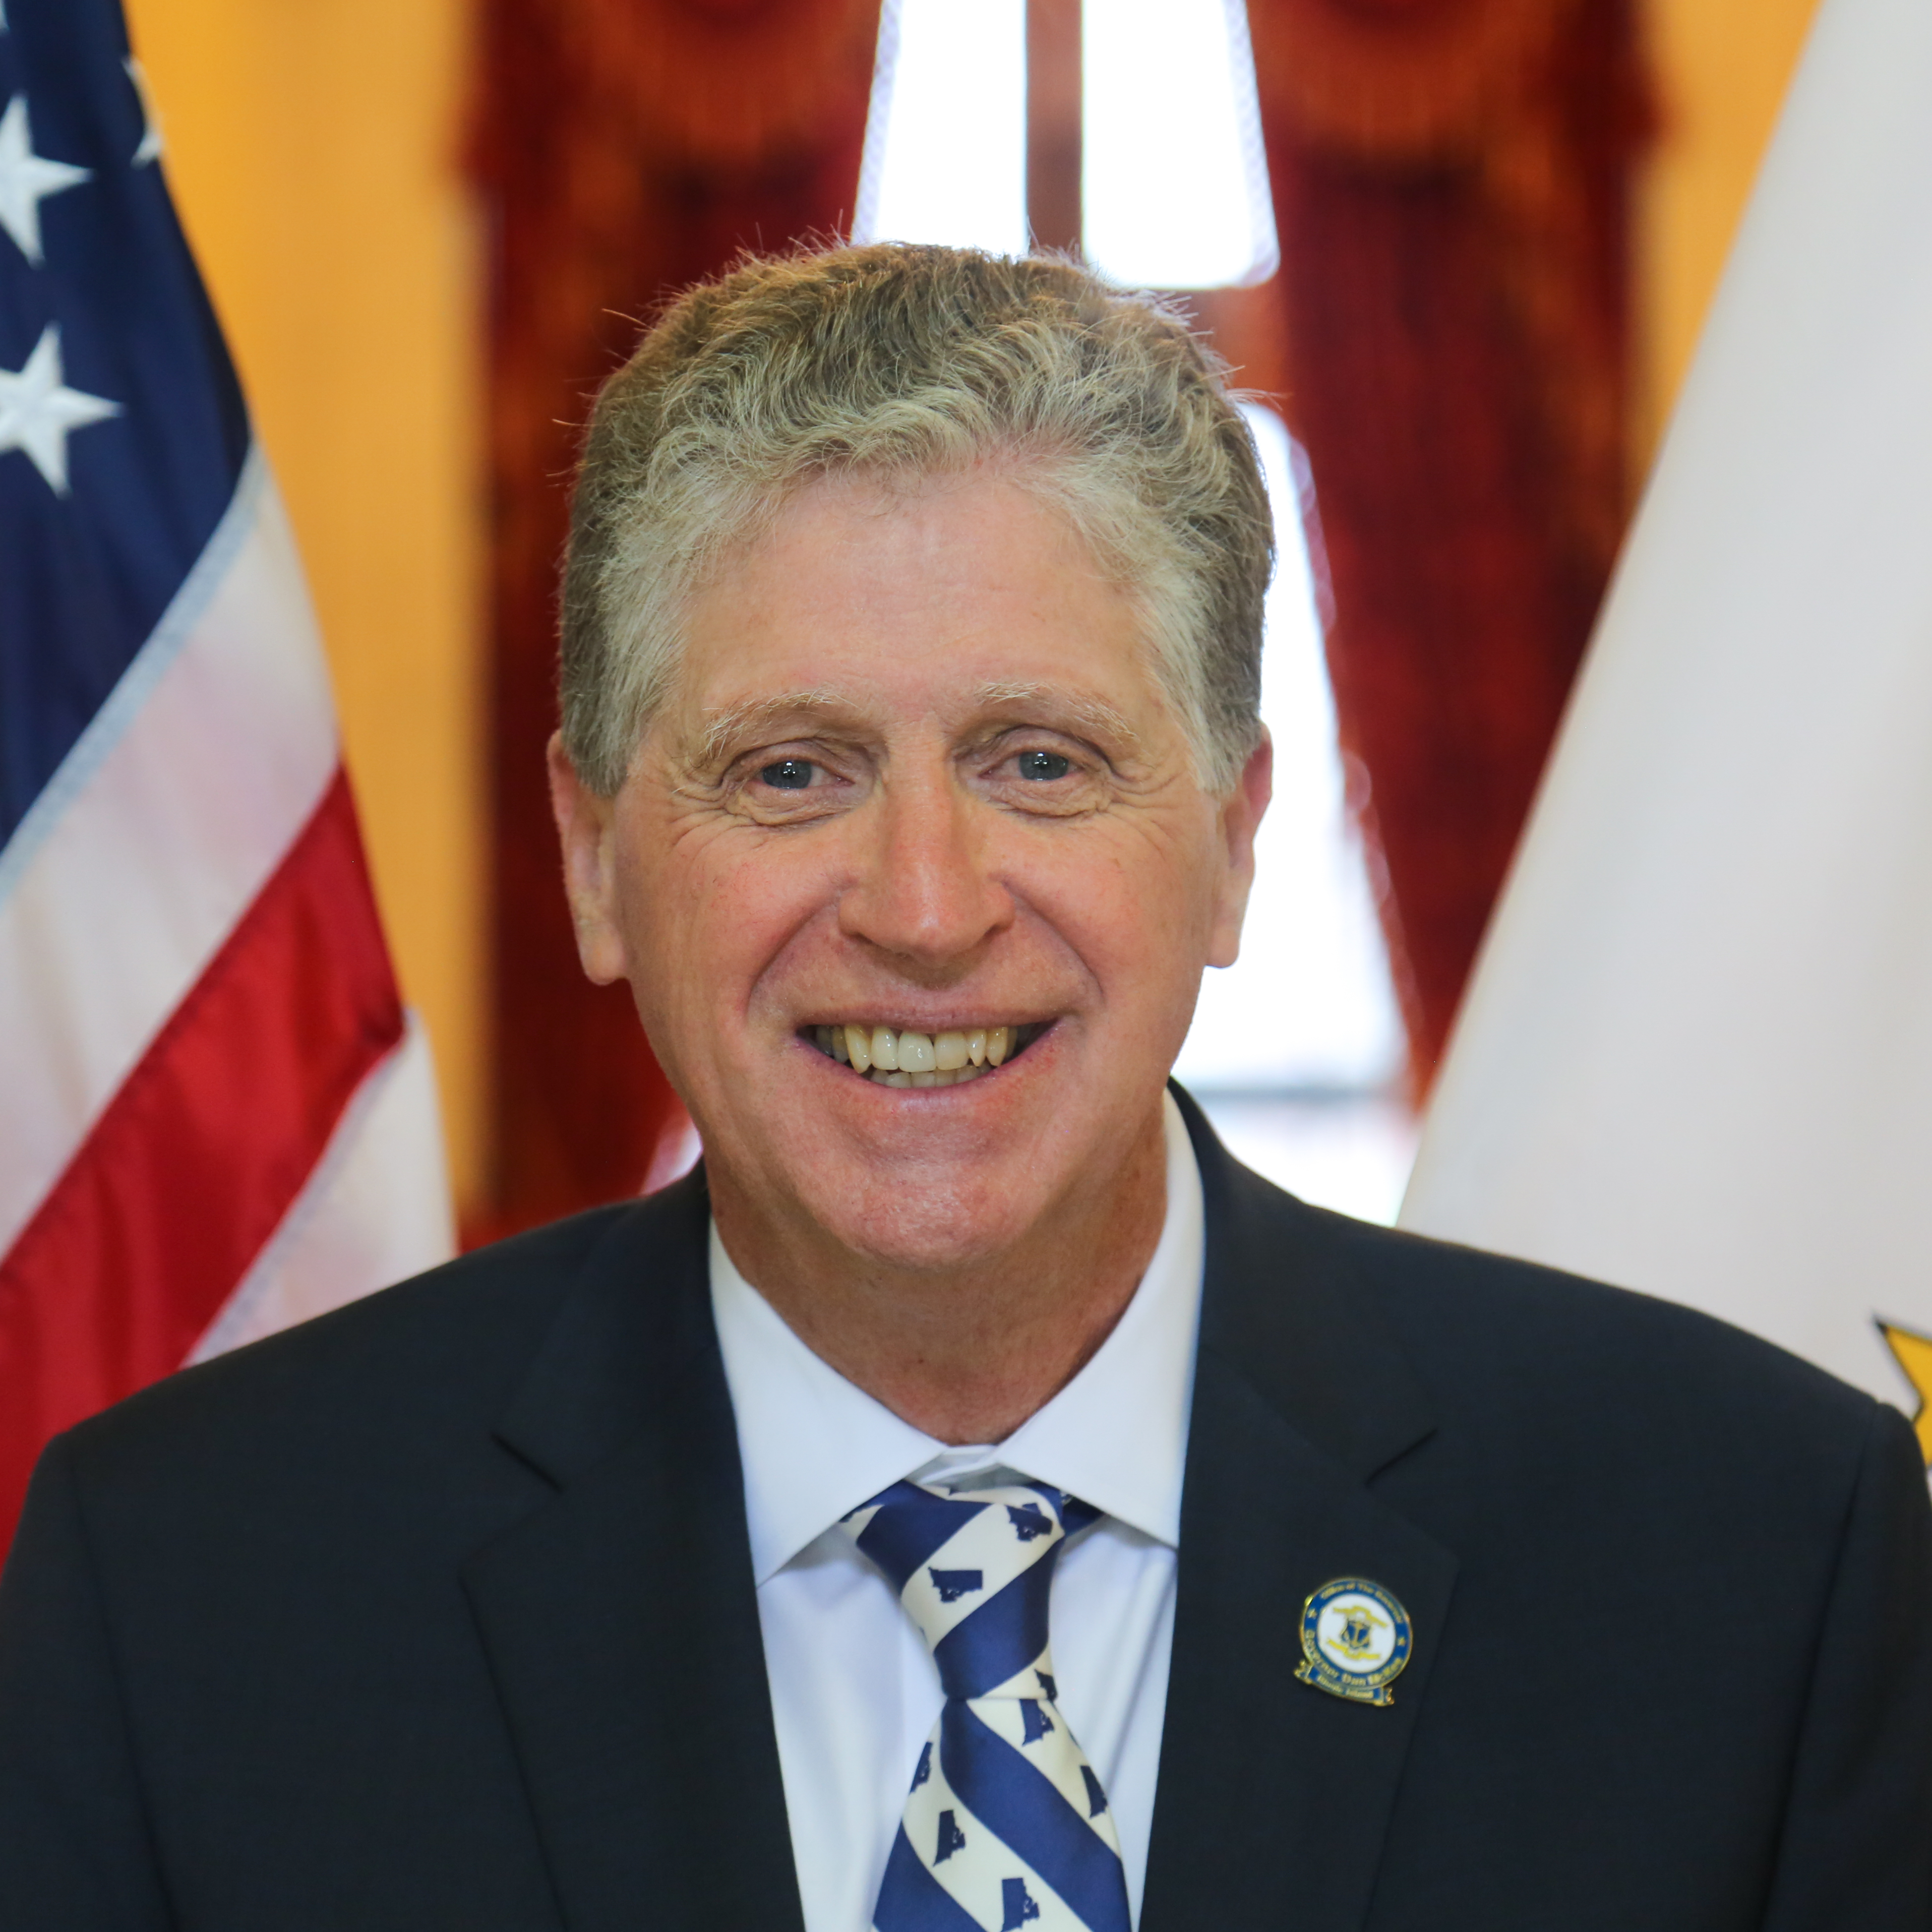 Governor Daniel J. McKee